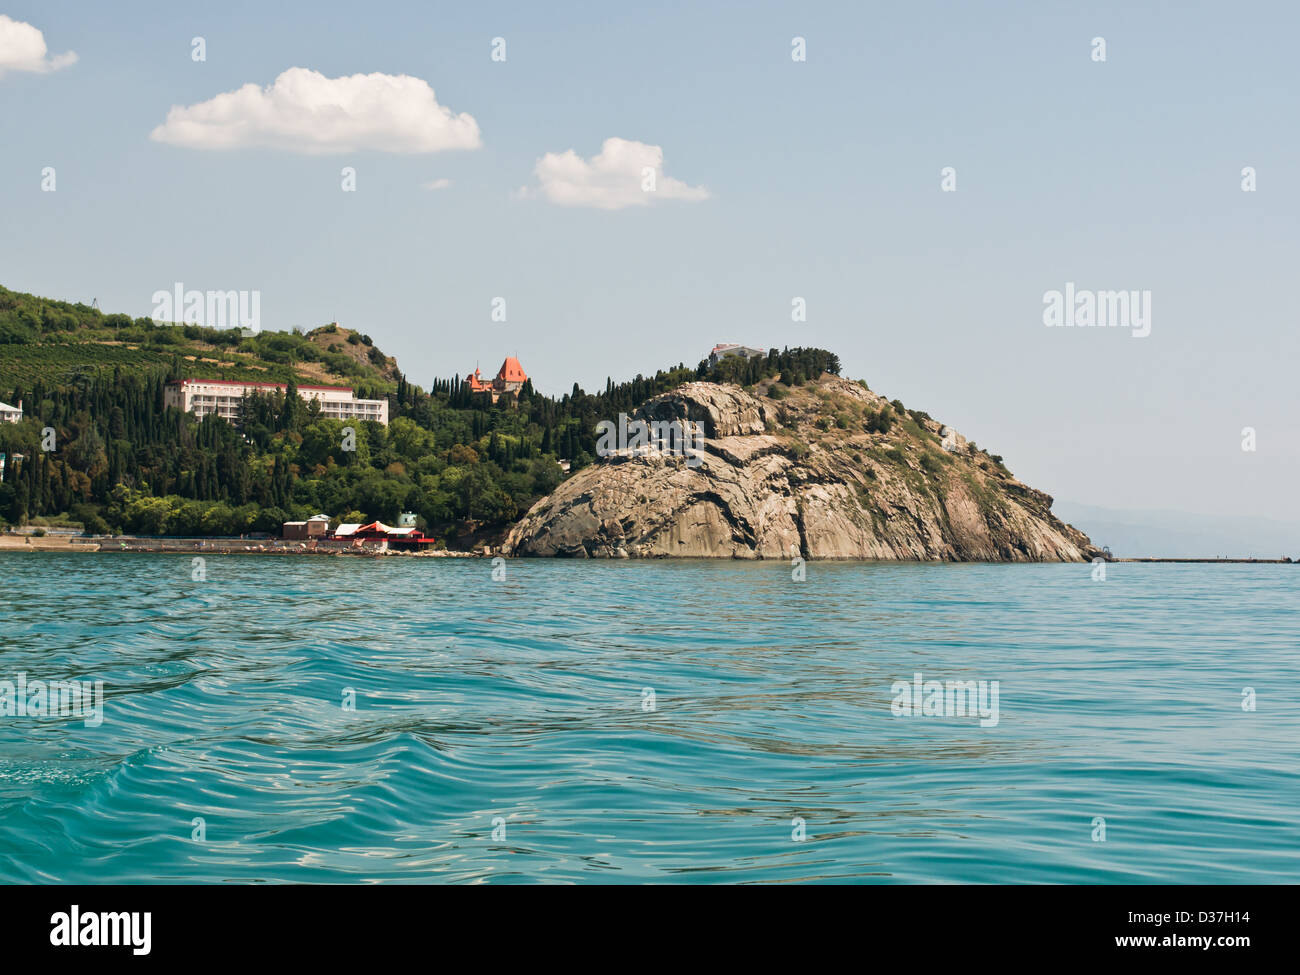 Horizon Over Water, Summer, Cliff, Beach, Mountain, Forest, Black Sea, Sea, Tourist Resort, Passenger Craft, Recreational Stock Photo